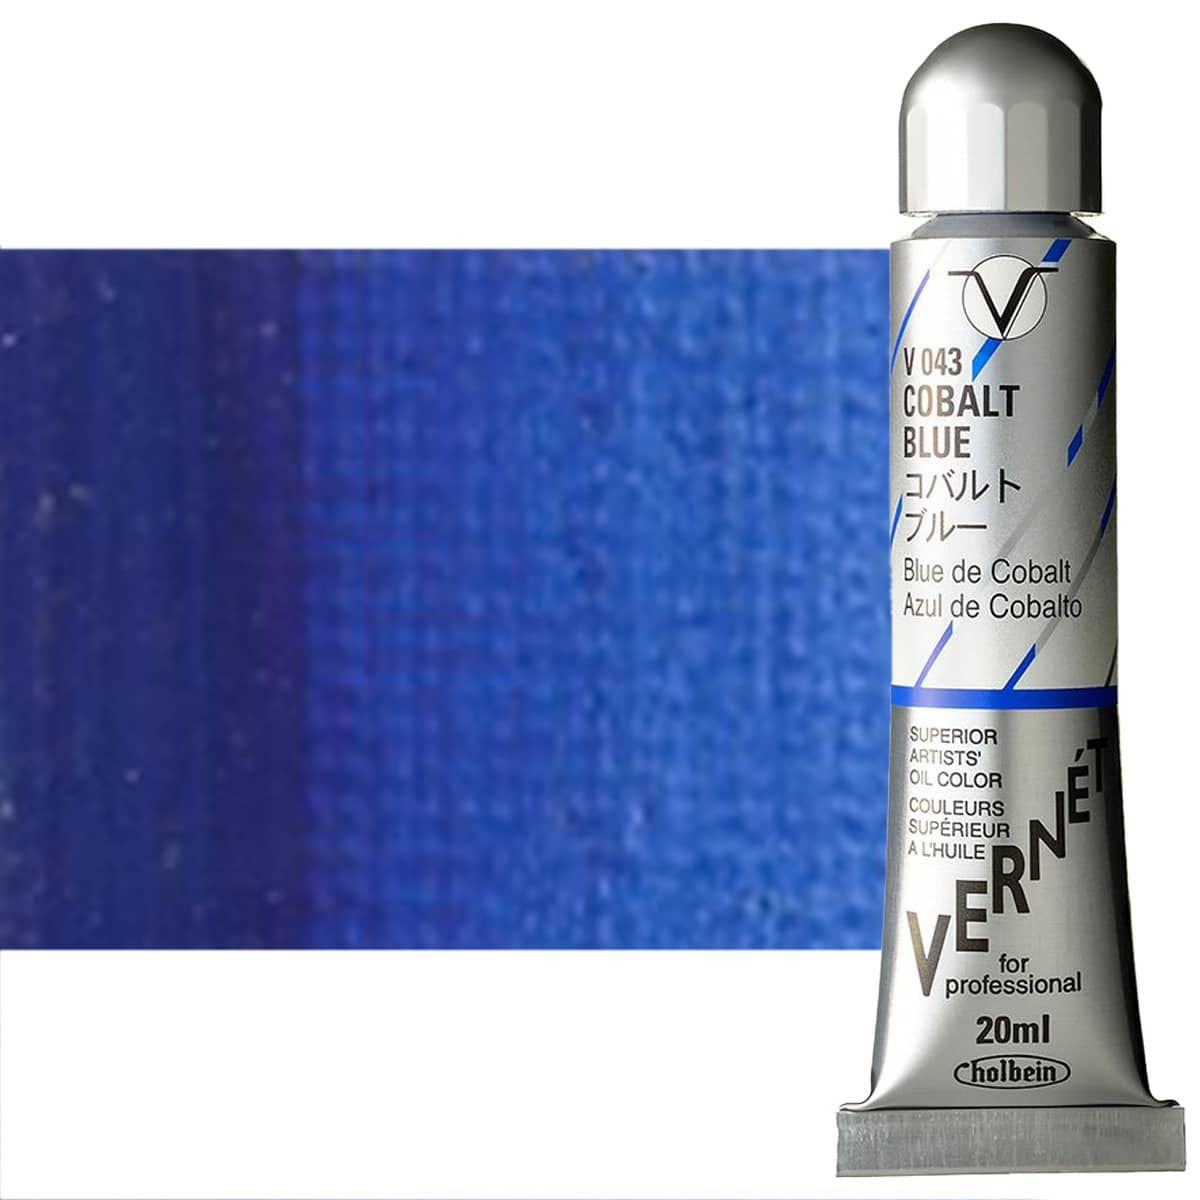 Holbein Vern?t Oil Color 20 ml Tube - Cobalt Blue